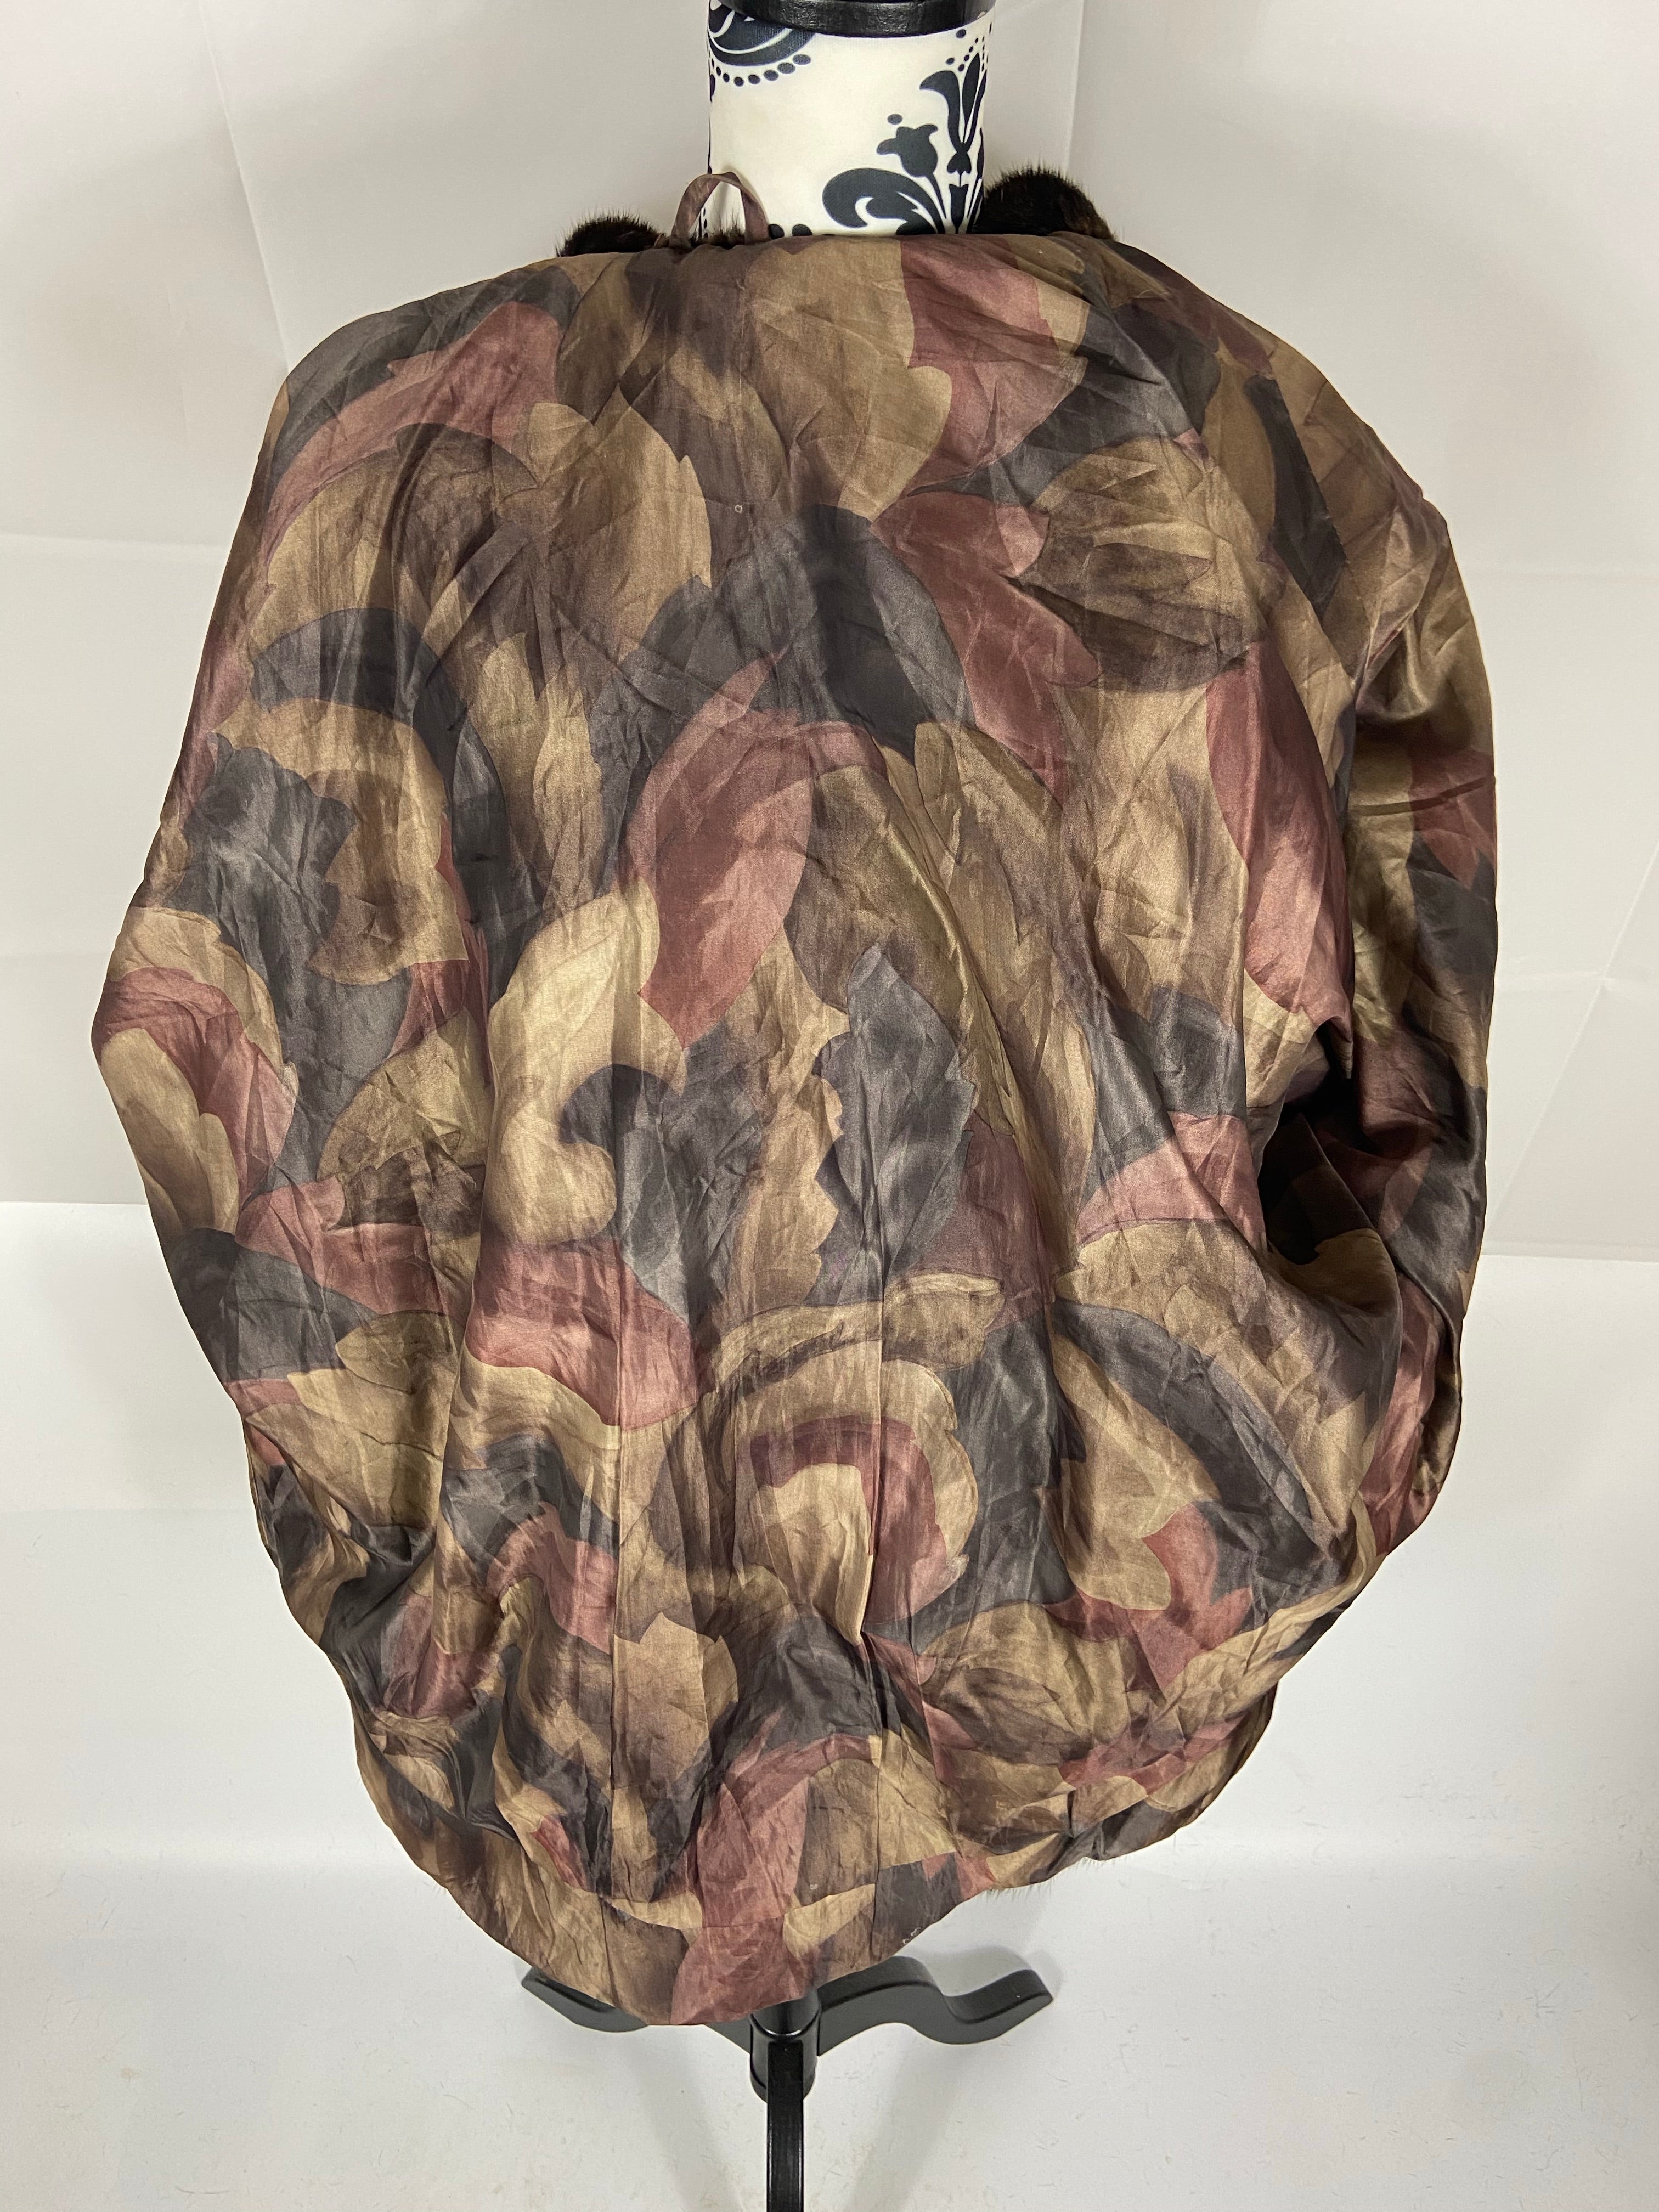 Women’s Extremely Unique Designer Vintage Real Mink & Leather Striped Fur Coat Size: Large-XL Women’s